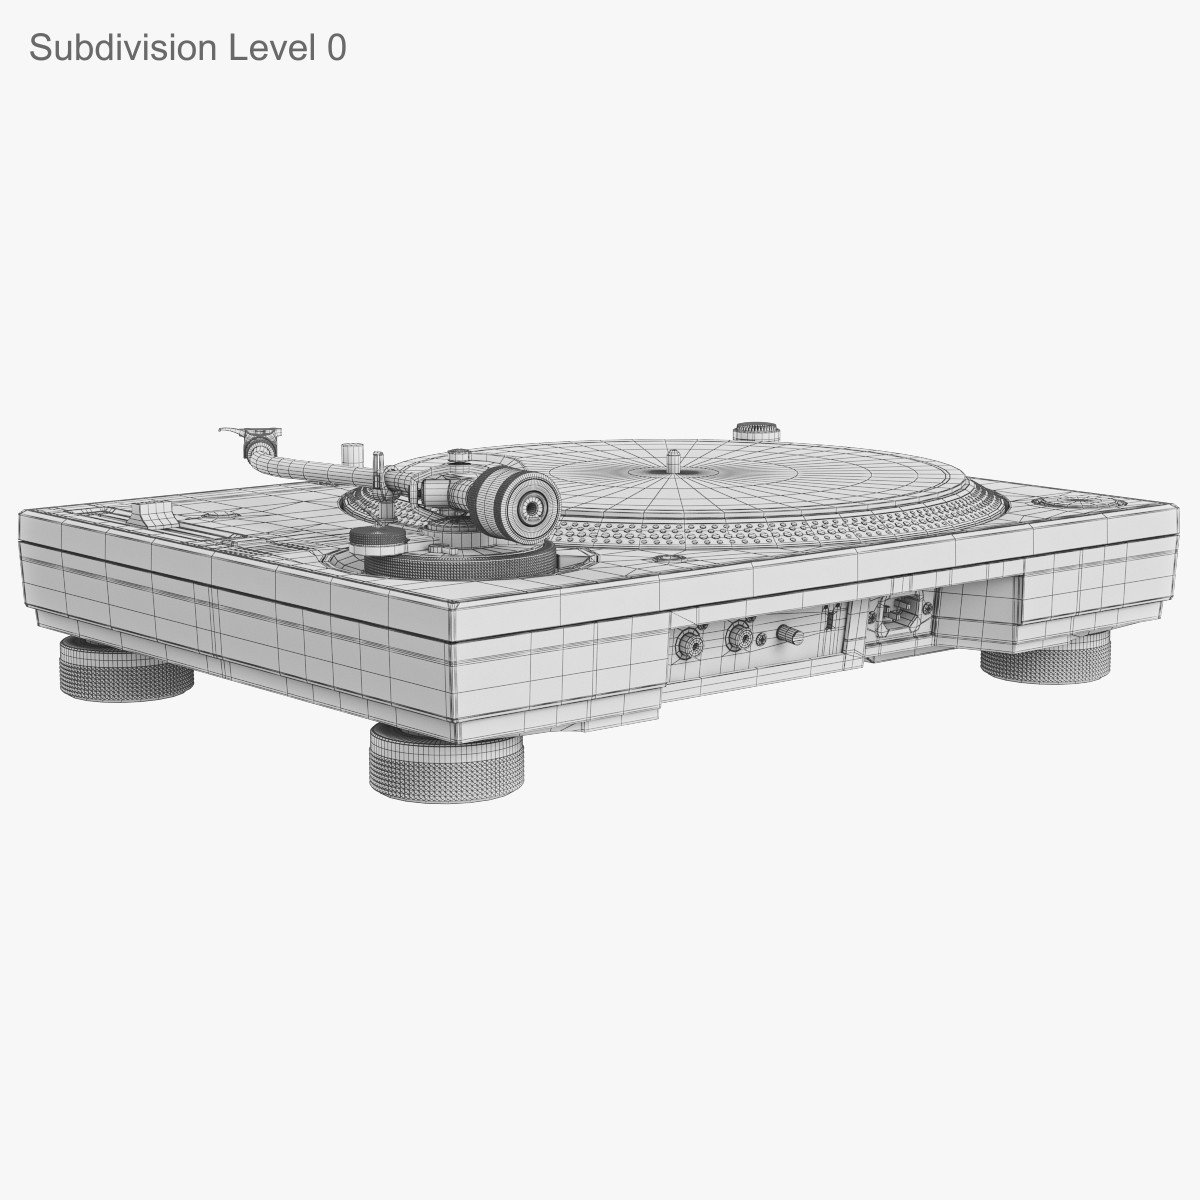 vinyl dj turntable Render Pioner player mixtable equipment 3D vray model realistic